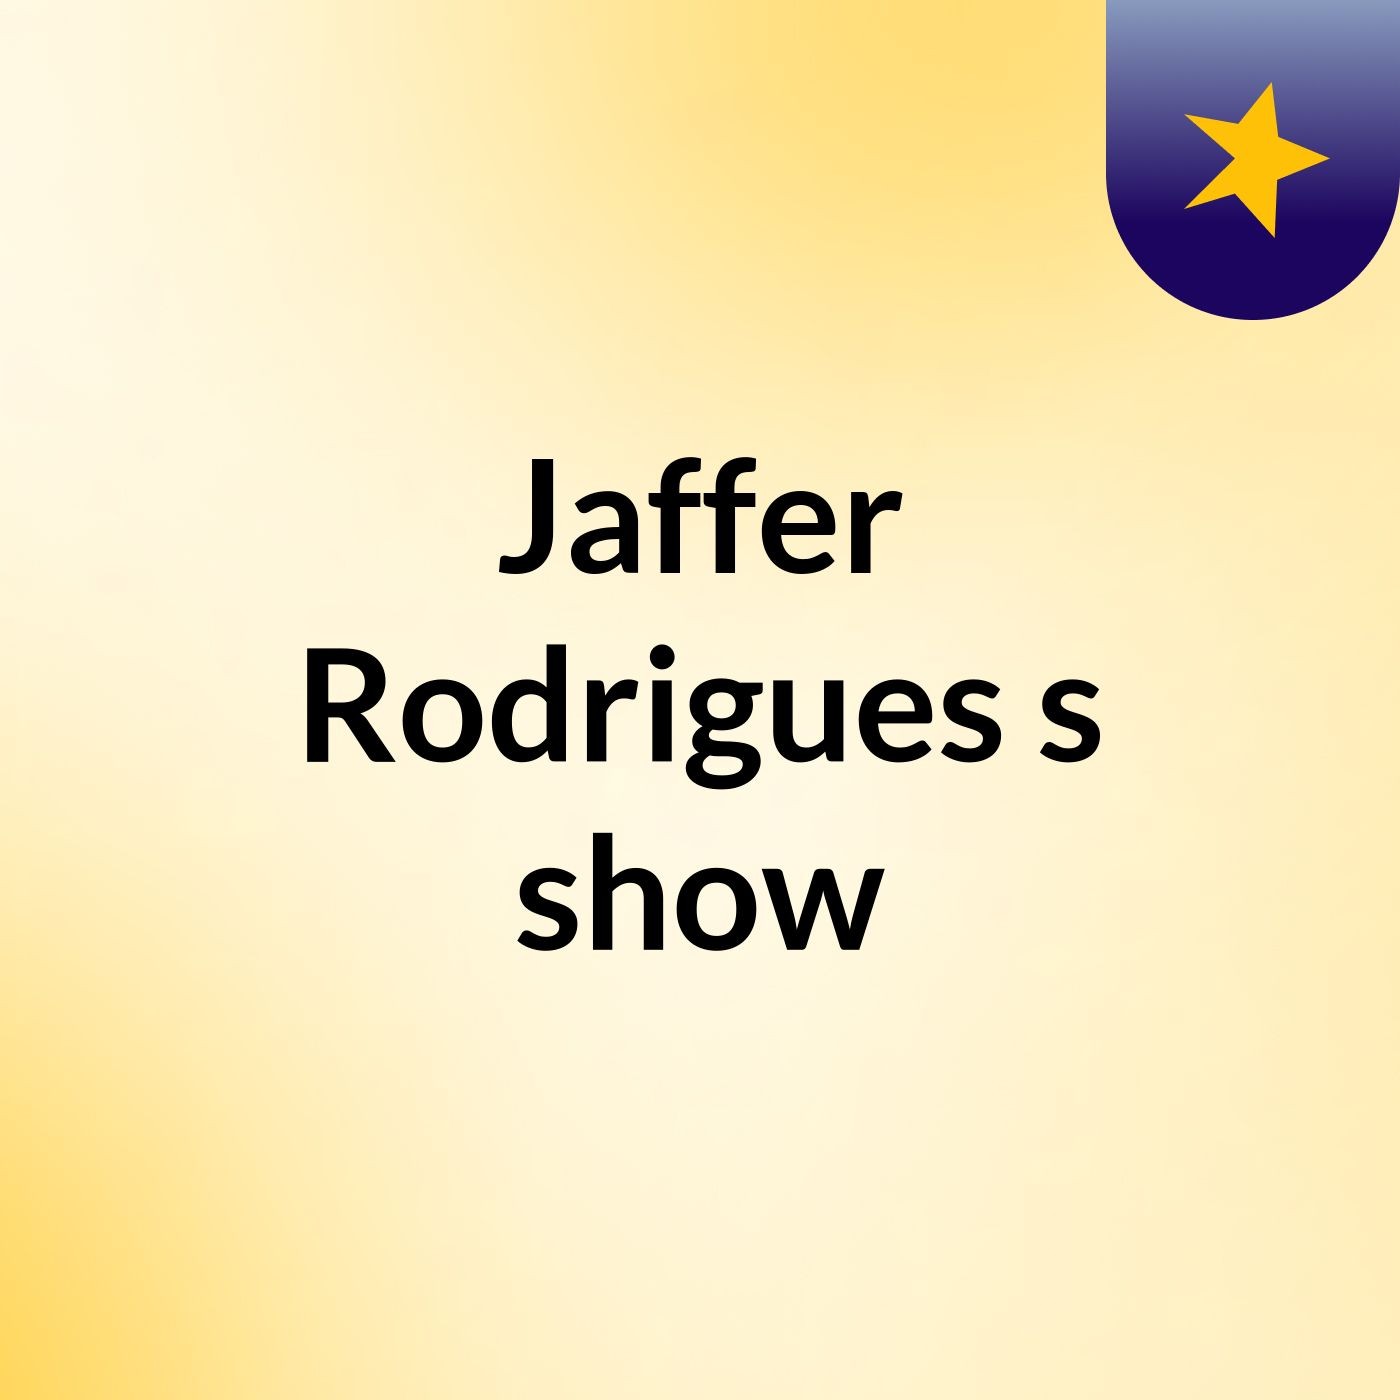 Jaffer Rodrigues's show